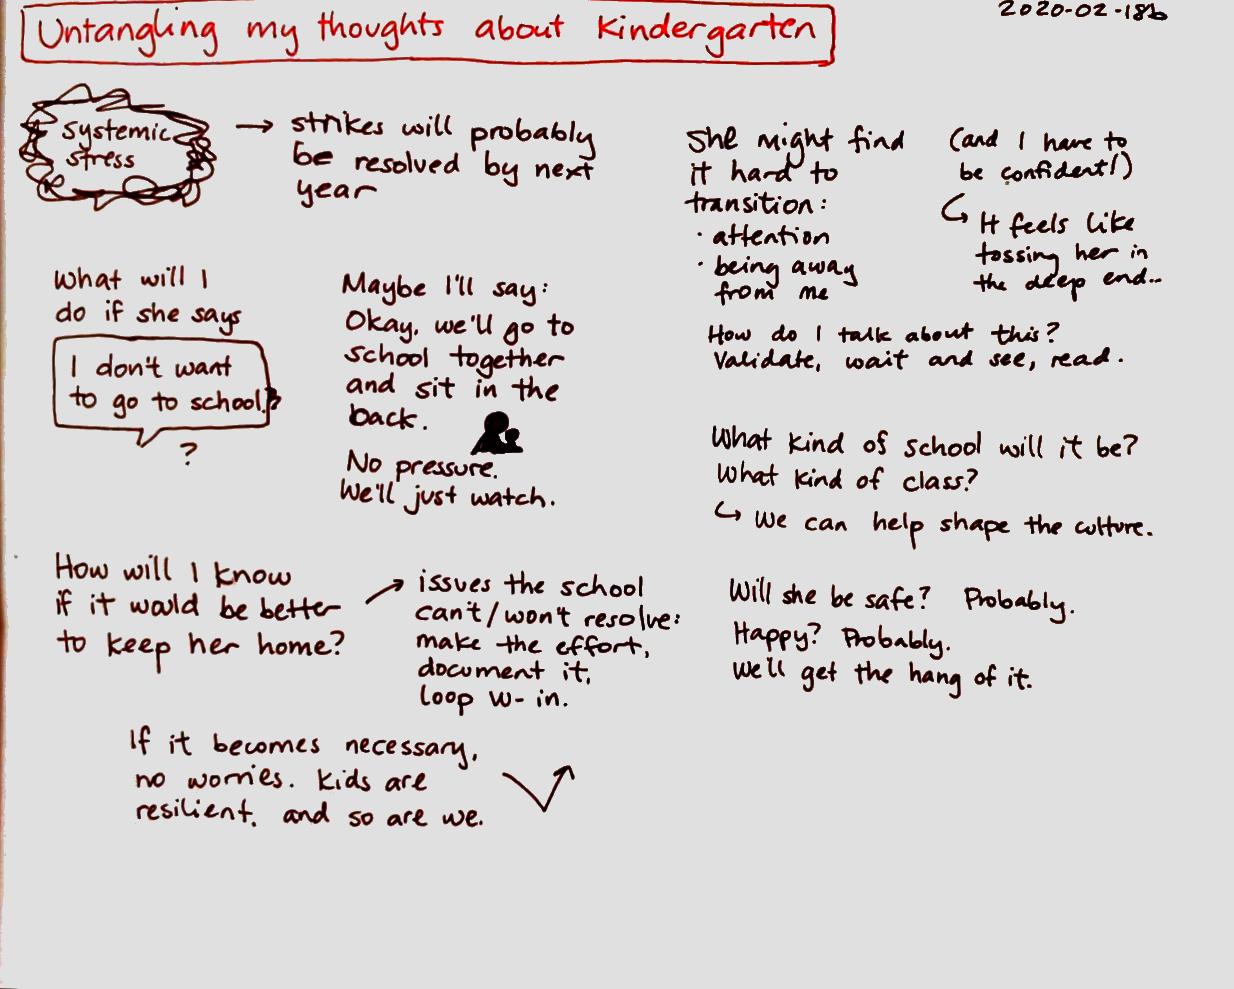 2020-02-18b Untangling my thoughts about kindergarten #kindergarten #education.jpg